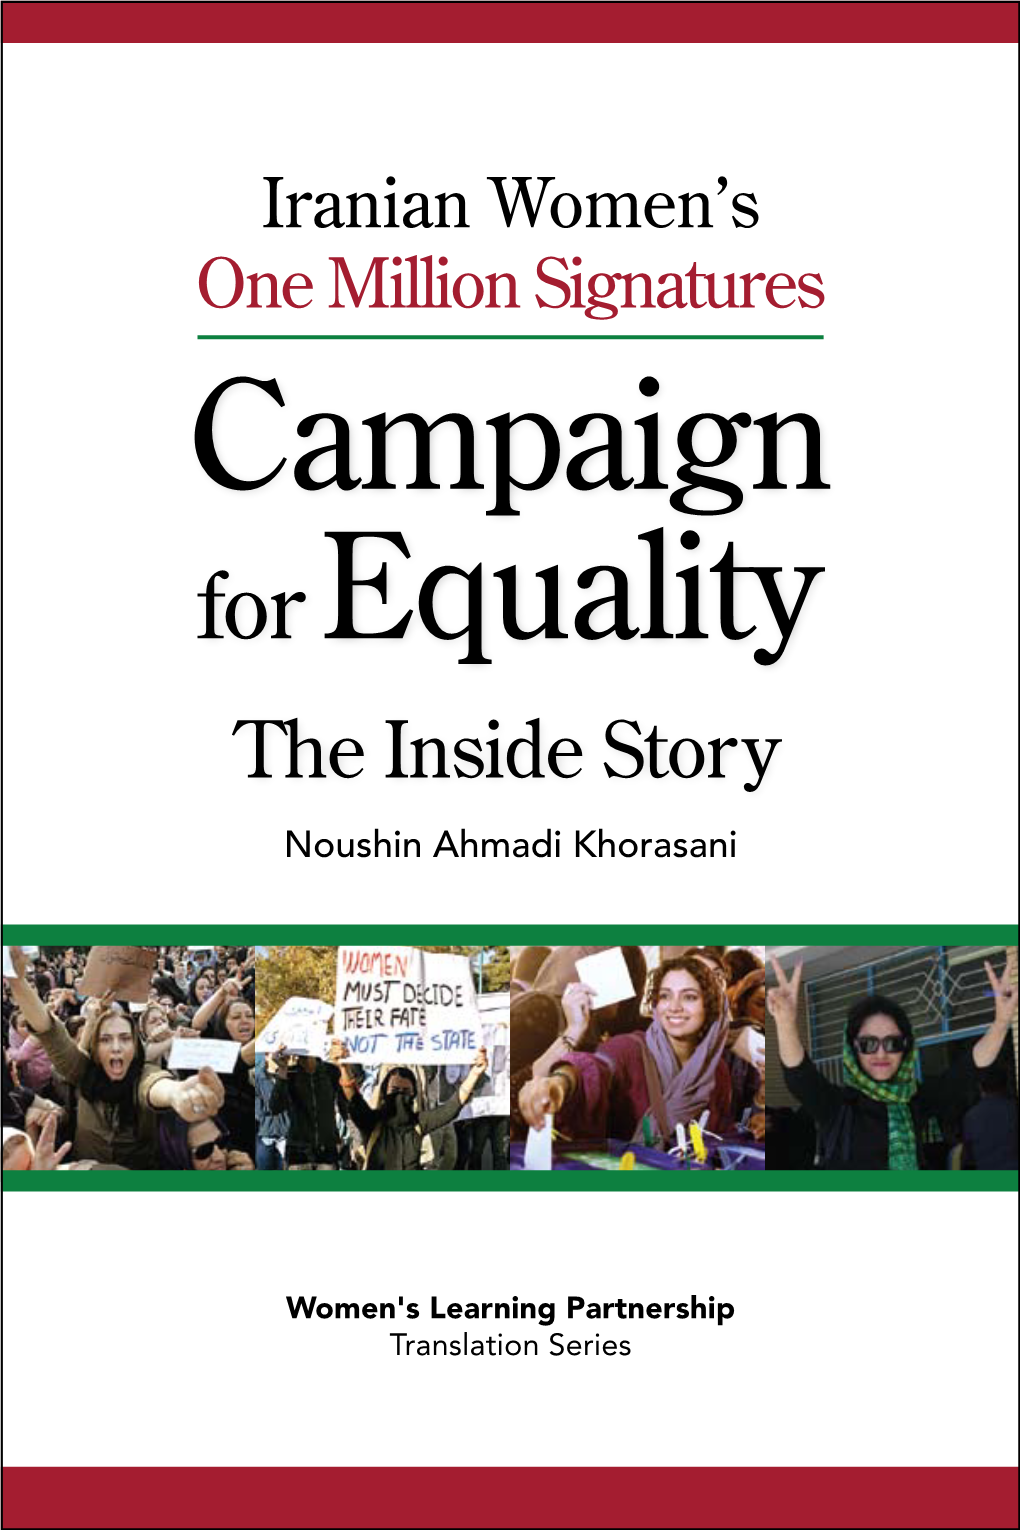 One Million Signatures Campaign for Equality the Inside Story Noushin Ahmadi Khorasani